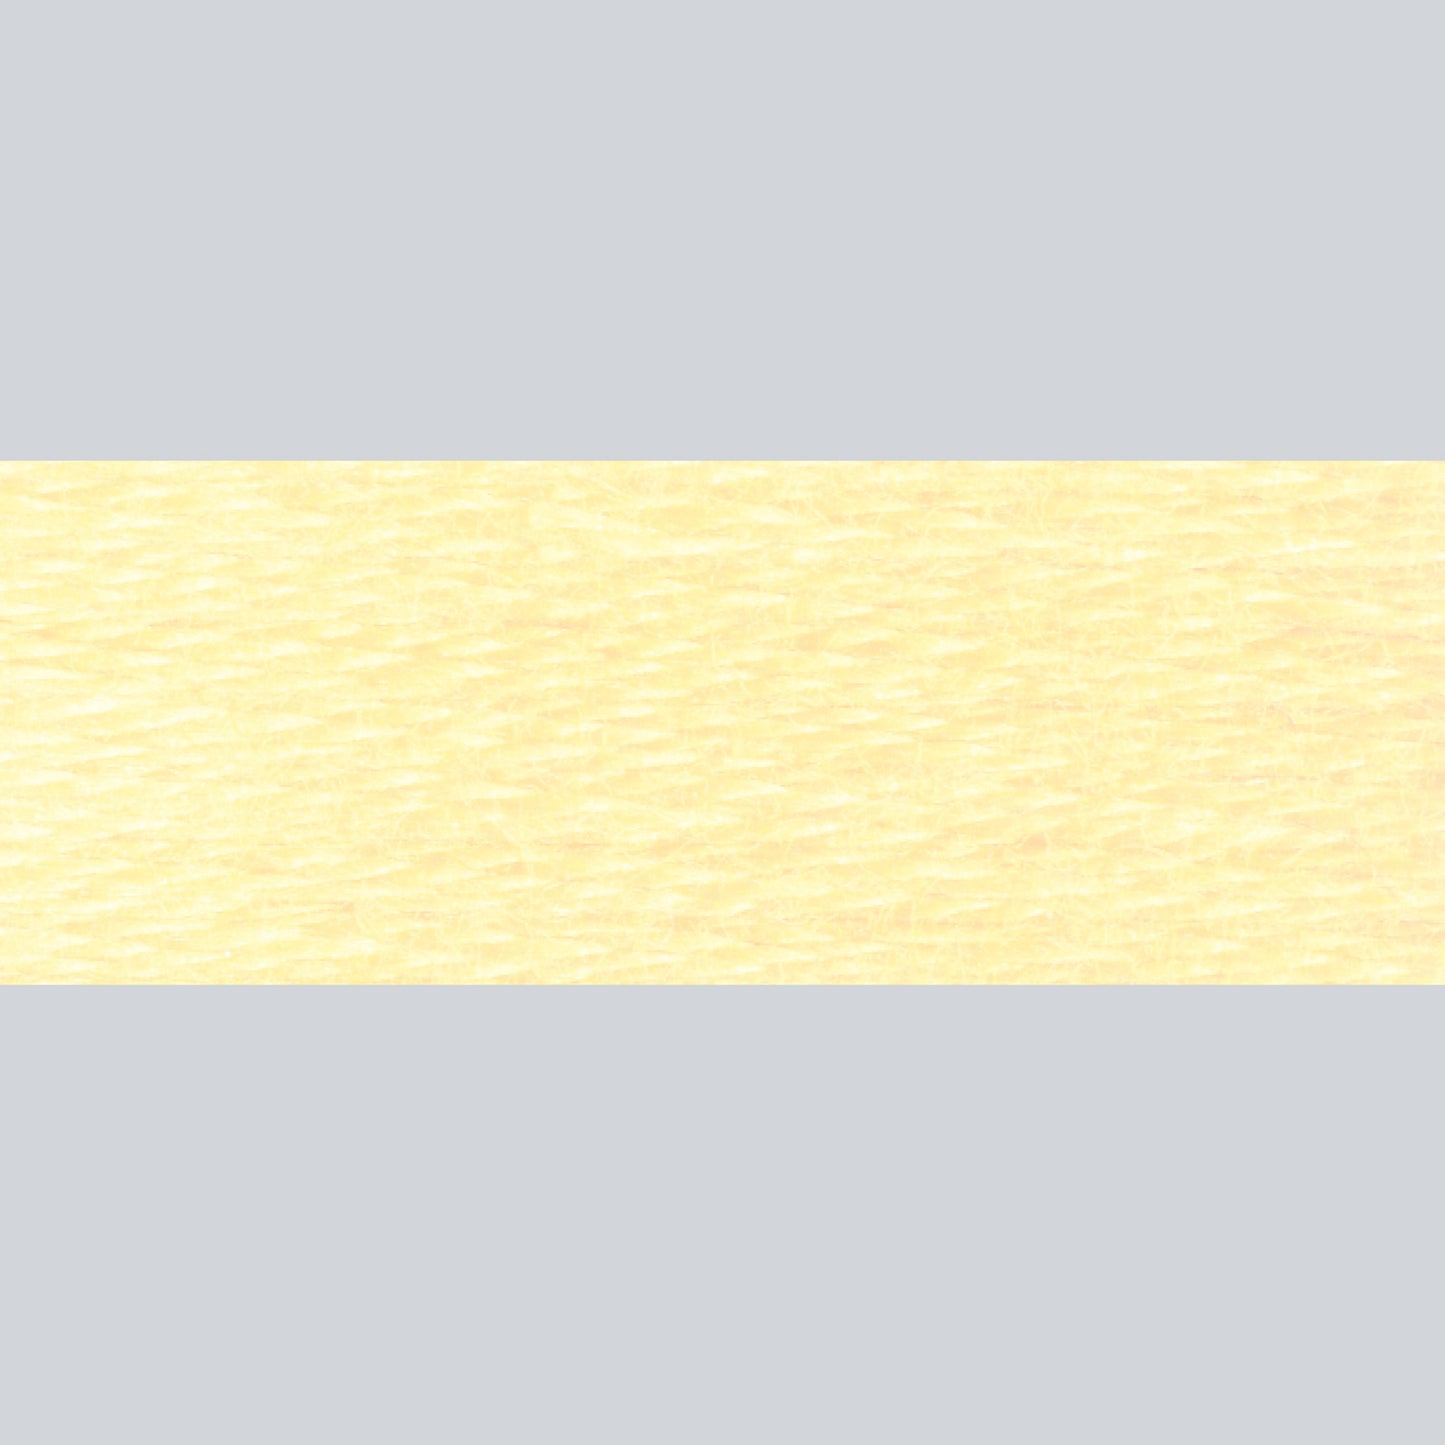 DMC Embroidery Floss - 745 Light Pale Yellow Alternative View #1